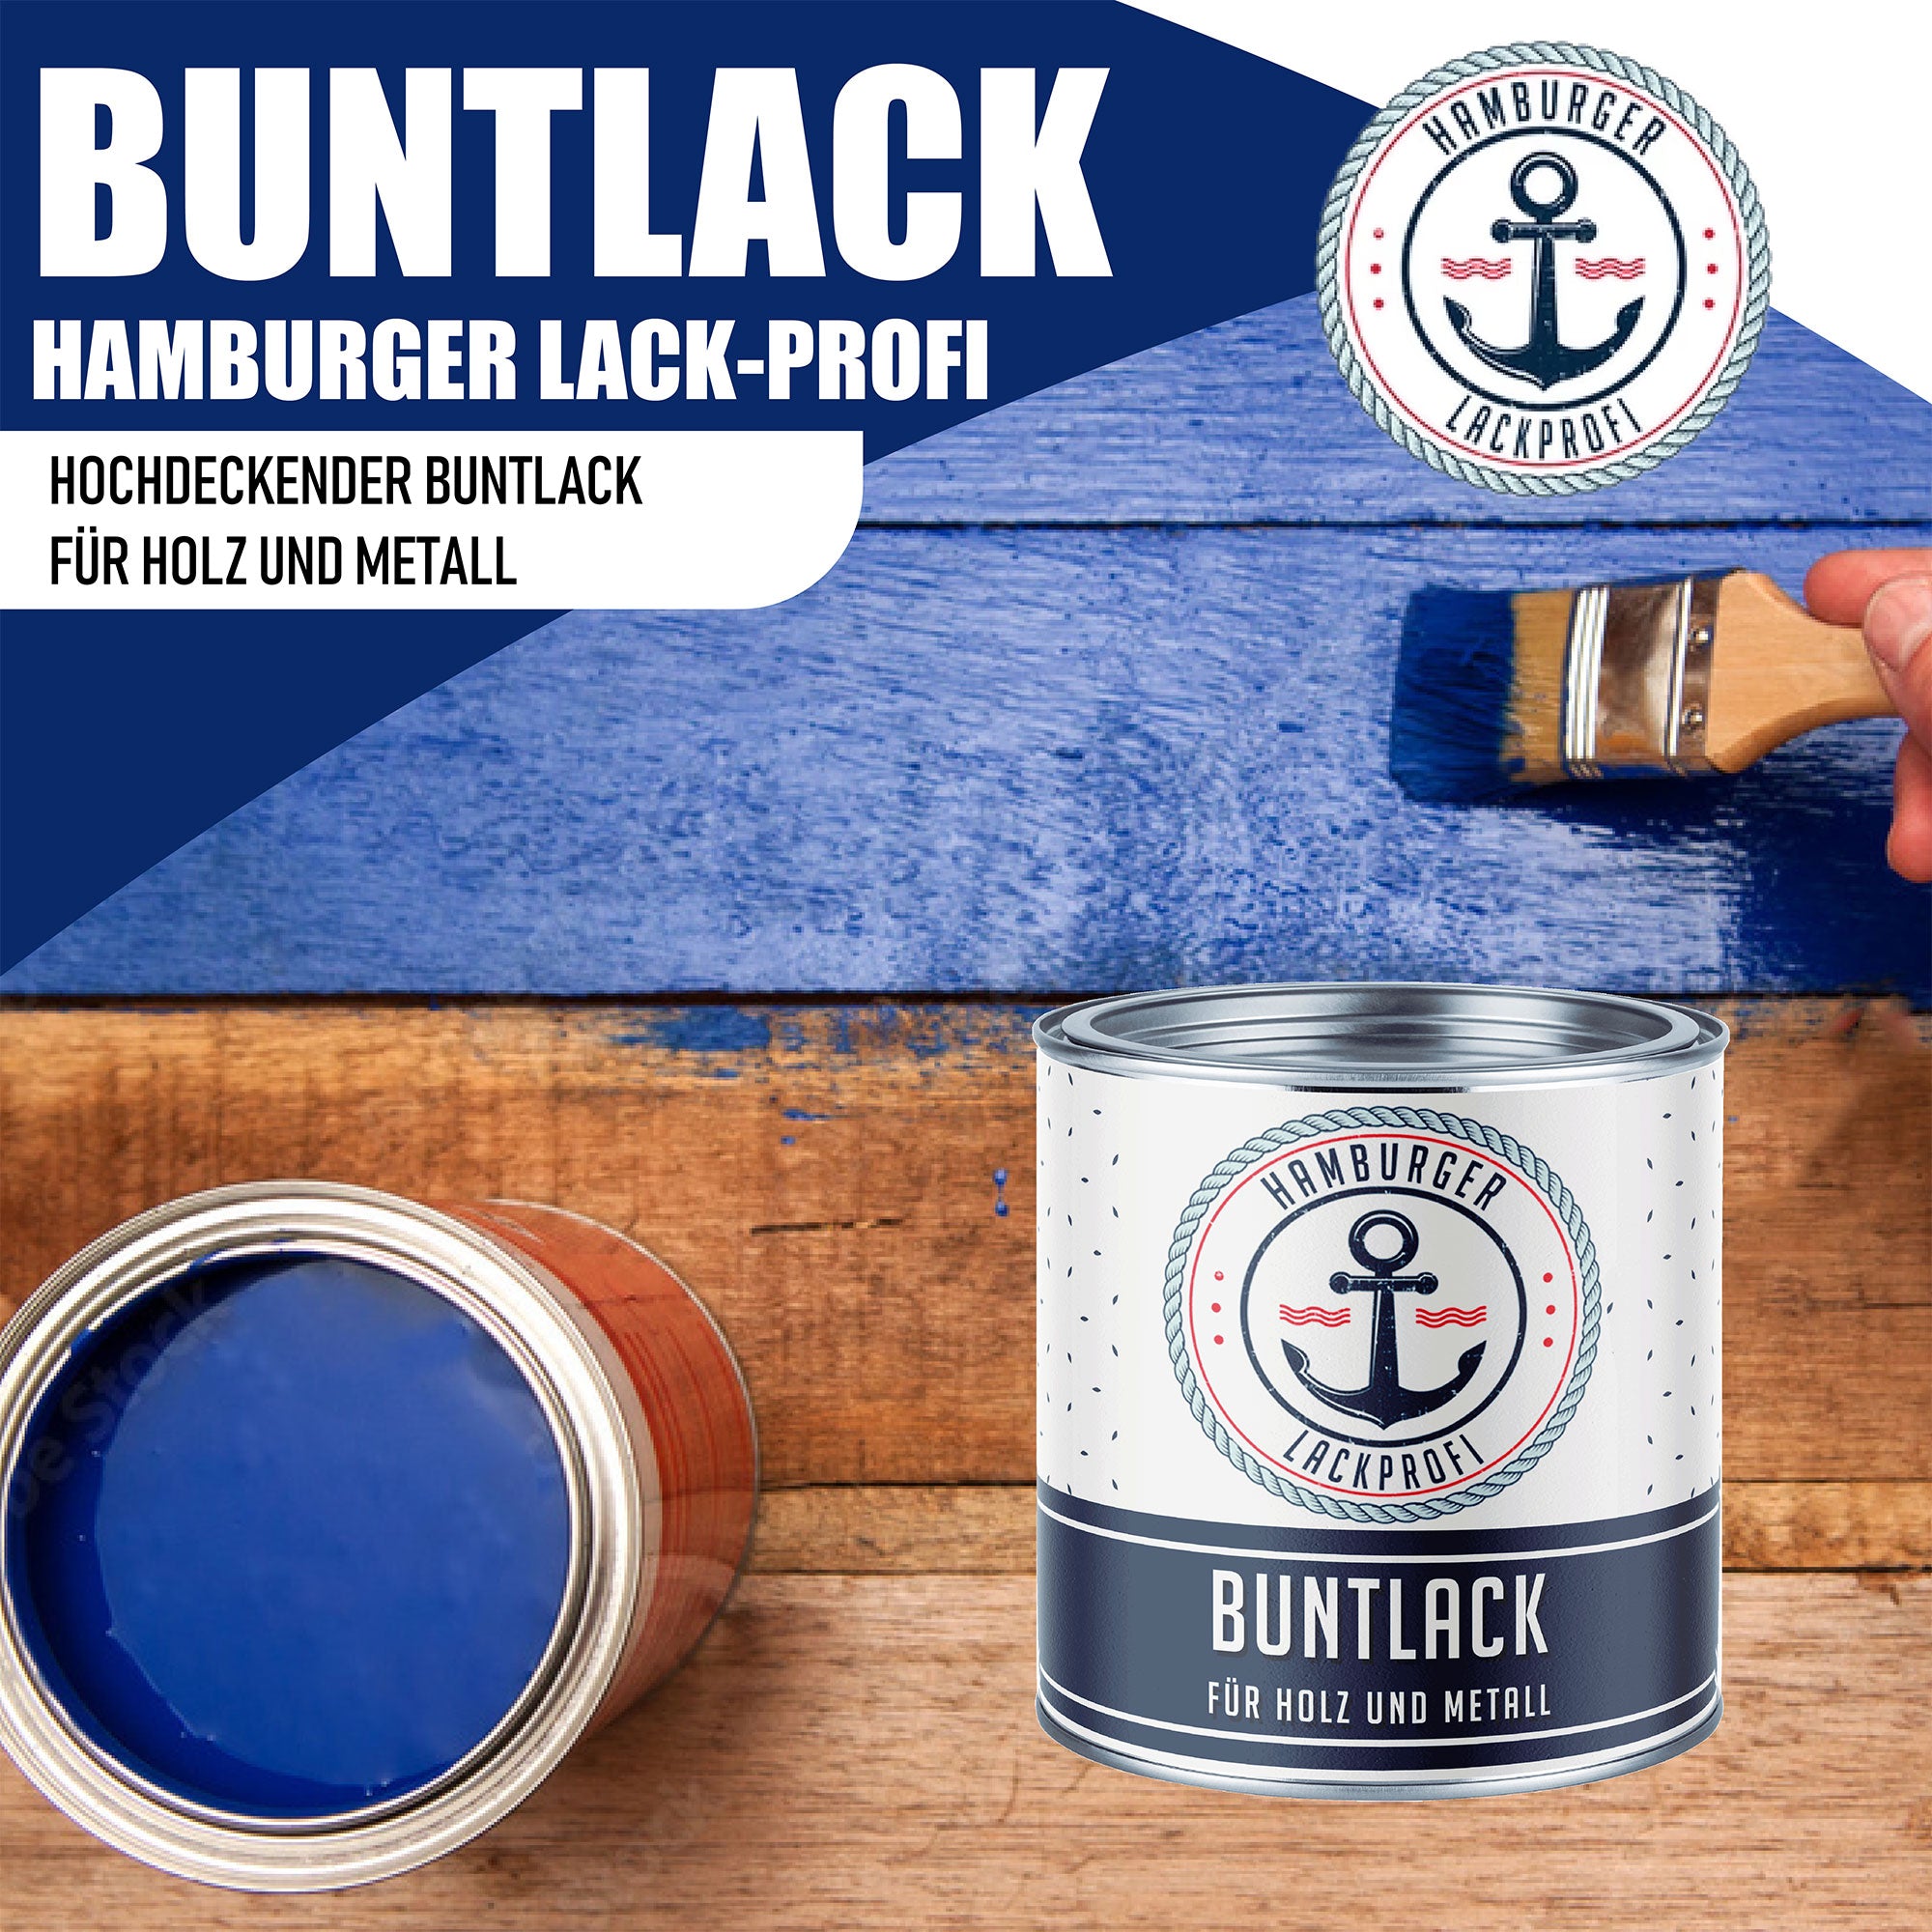 Hamburger Lack-Profi Buntlack in Signalviolett RAL 4008 mit Lackierset (X300) & Verdünnung (1 L) - 30% Sparangebot